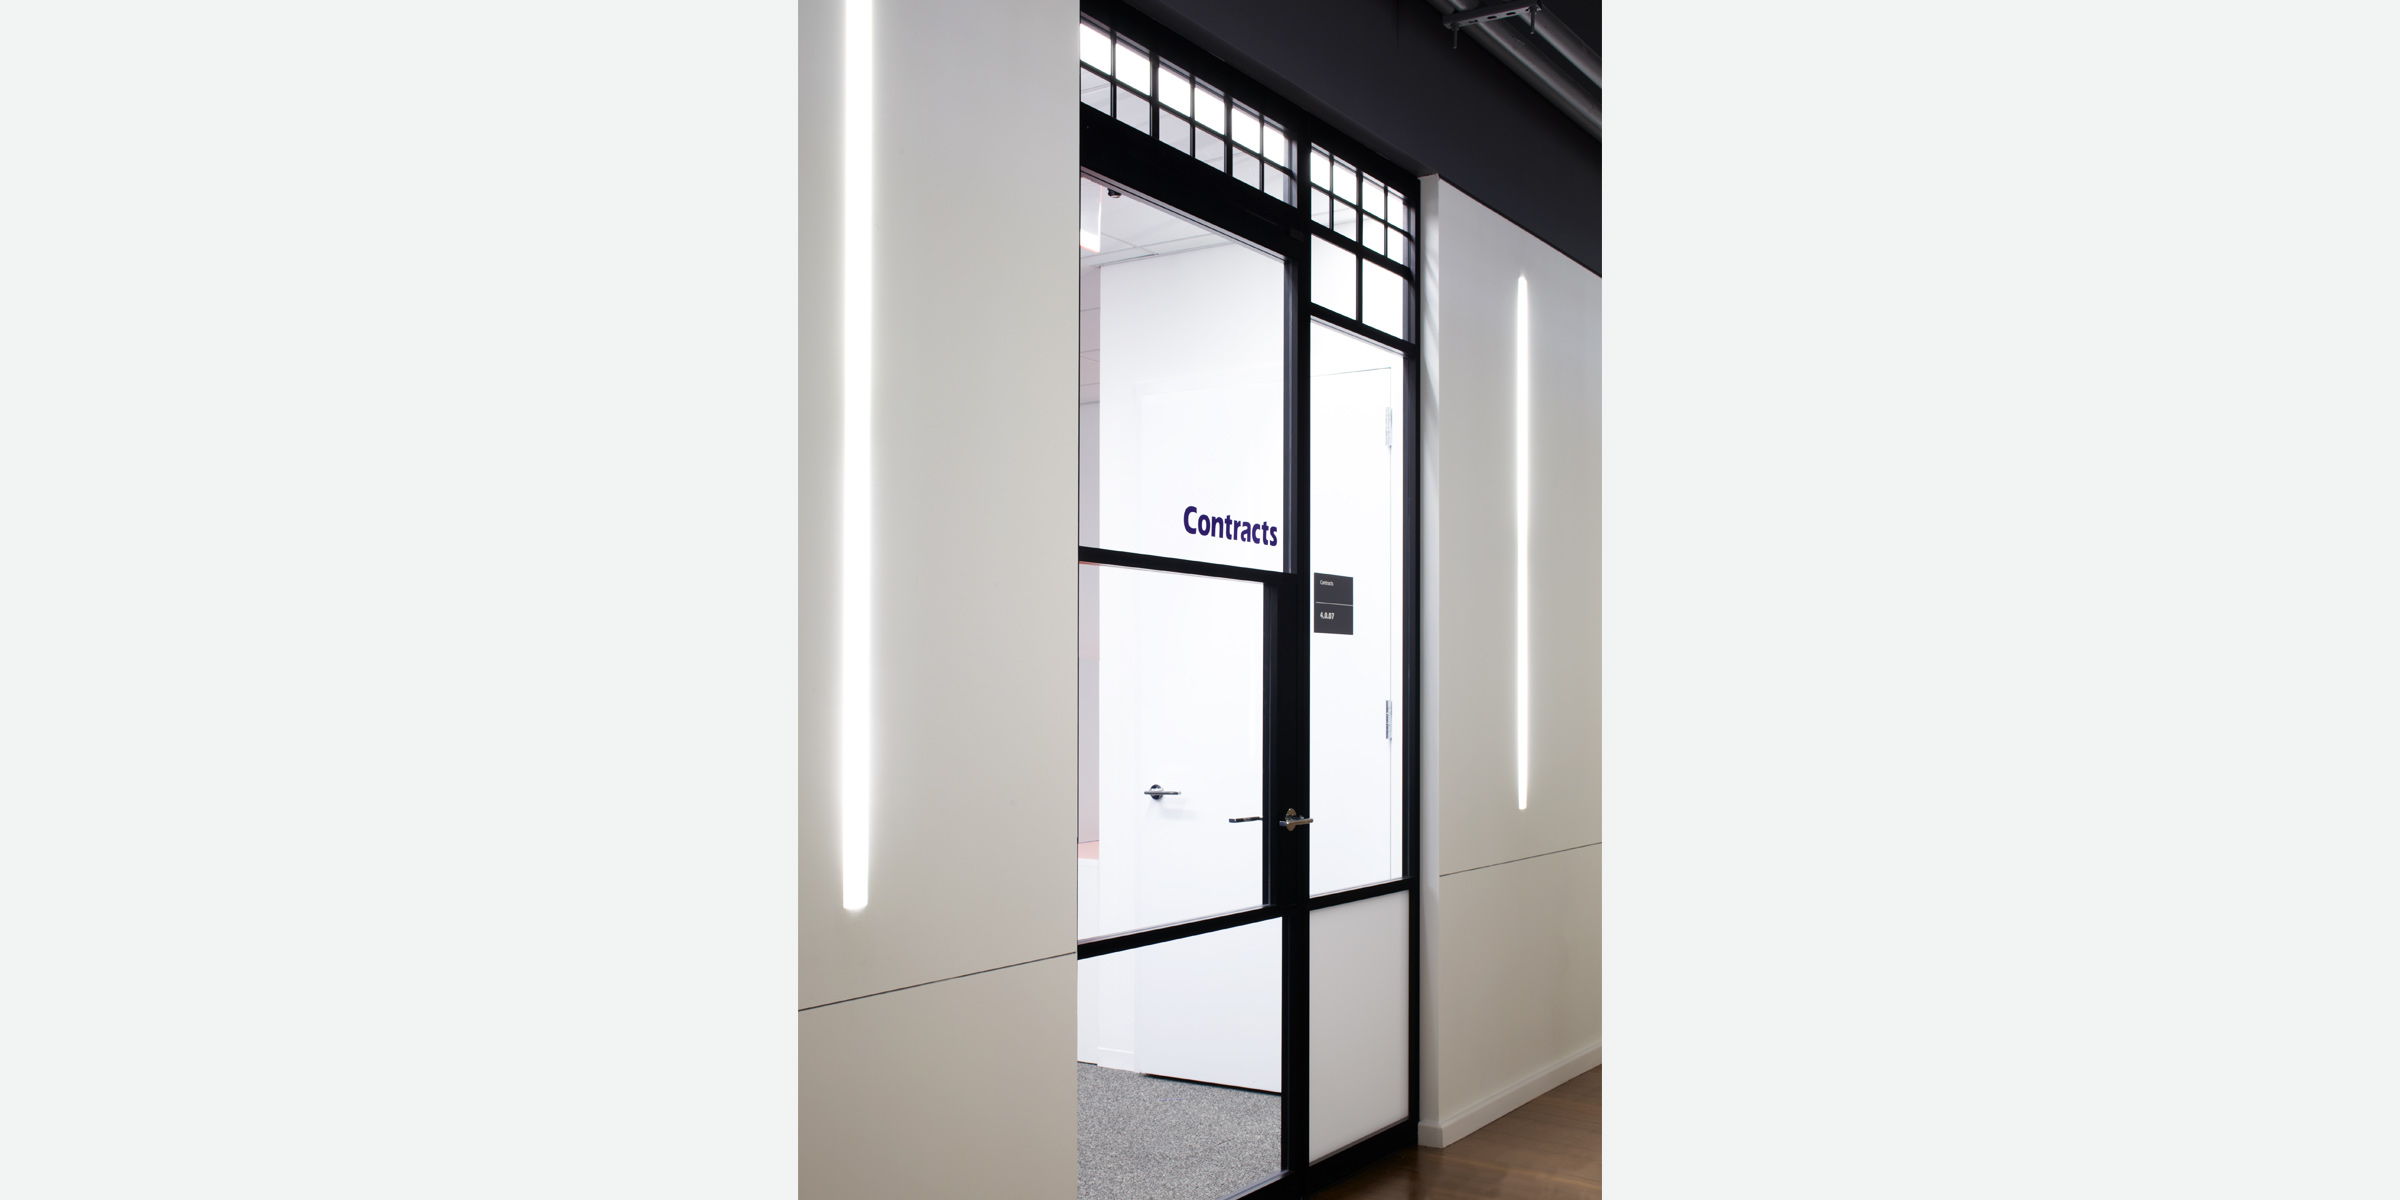 32BJ Service Employees International Union | New York City | Architect: Gerner Kronick + Valcarcel | Swing Doors, Fixed Panels